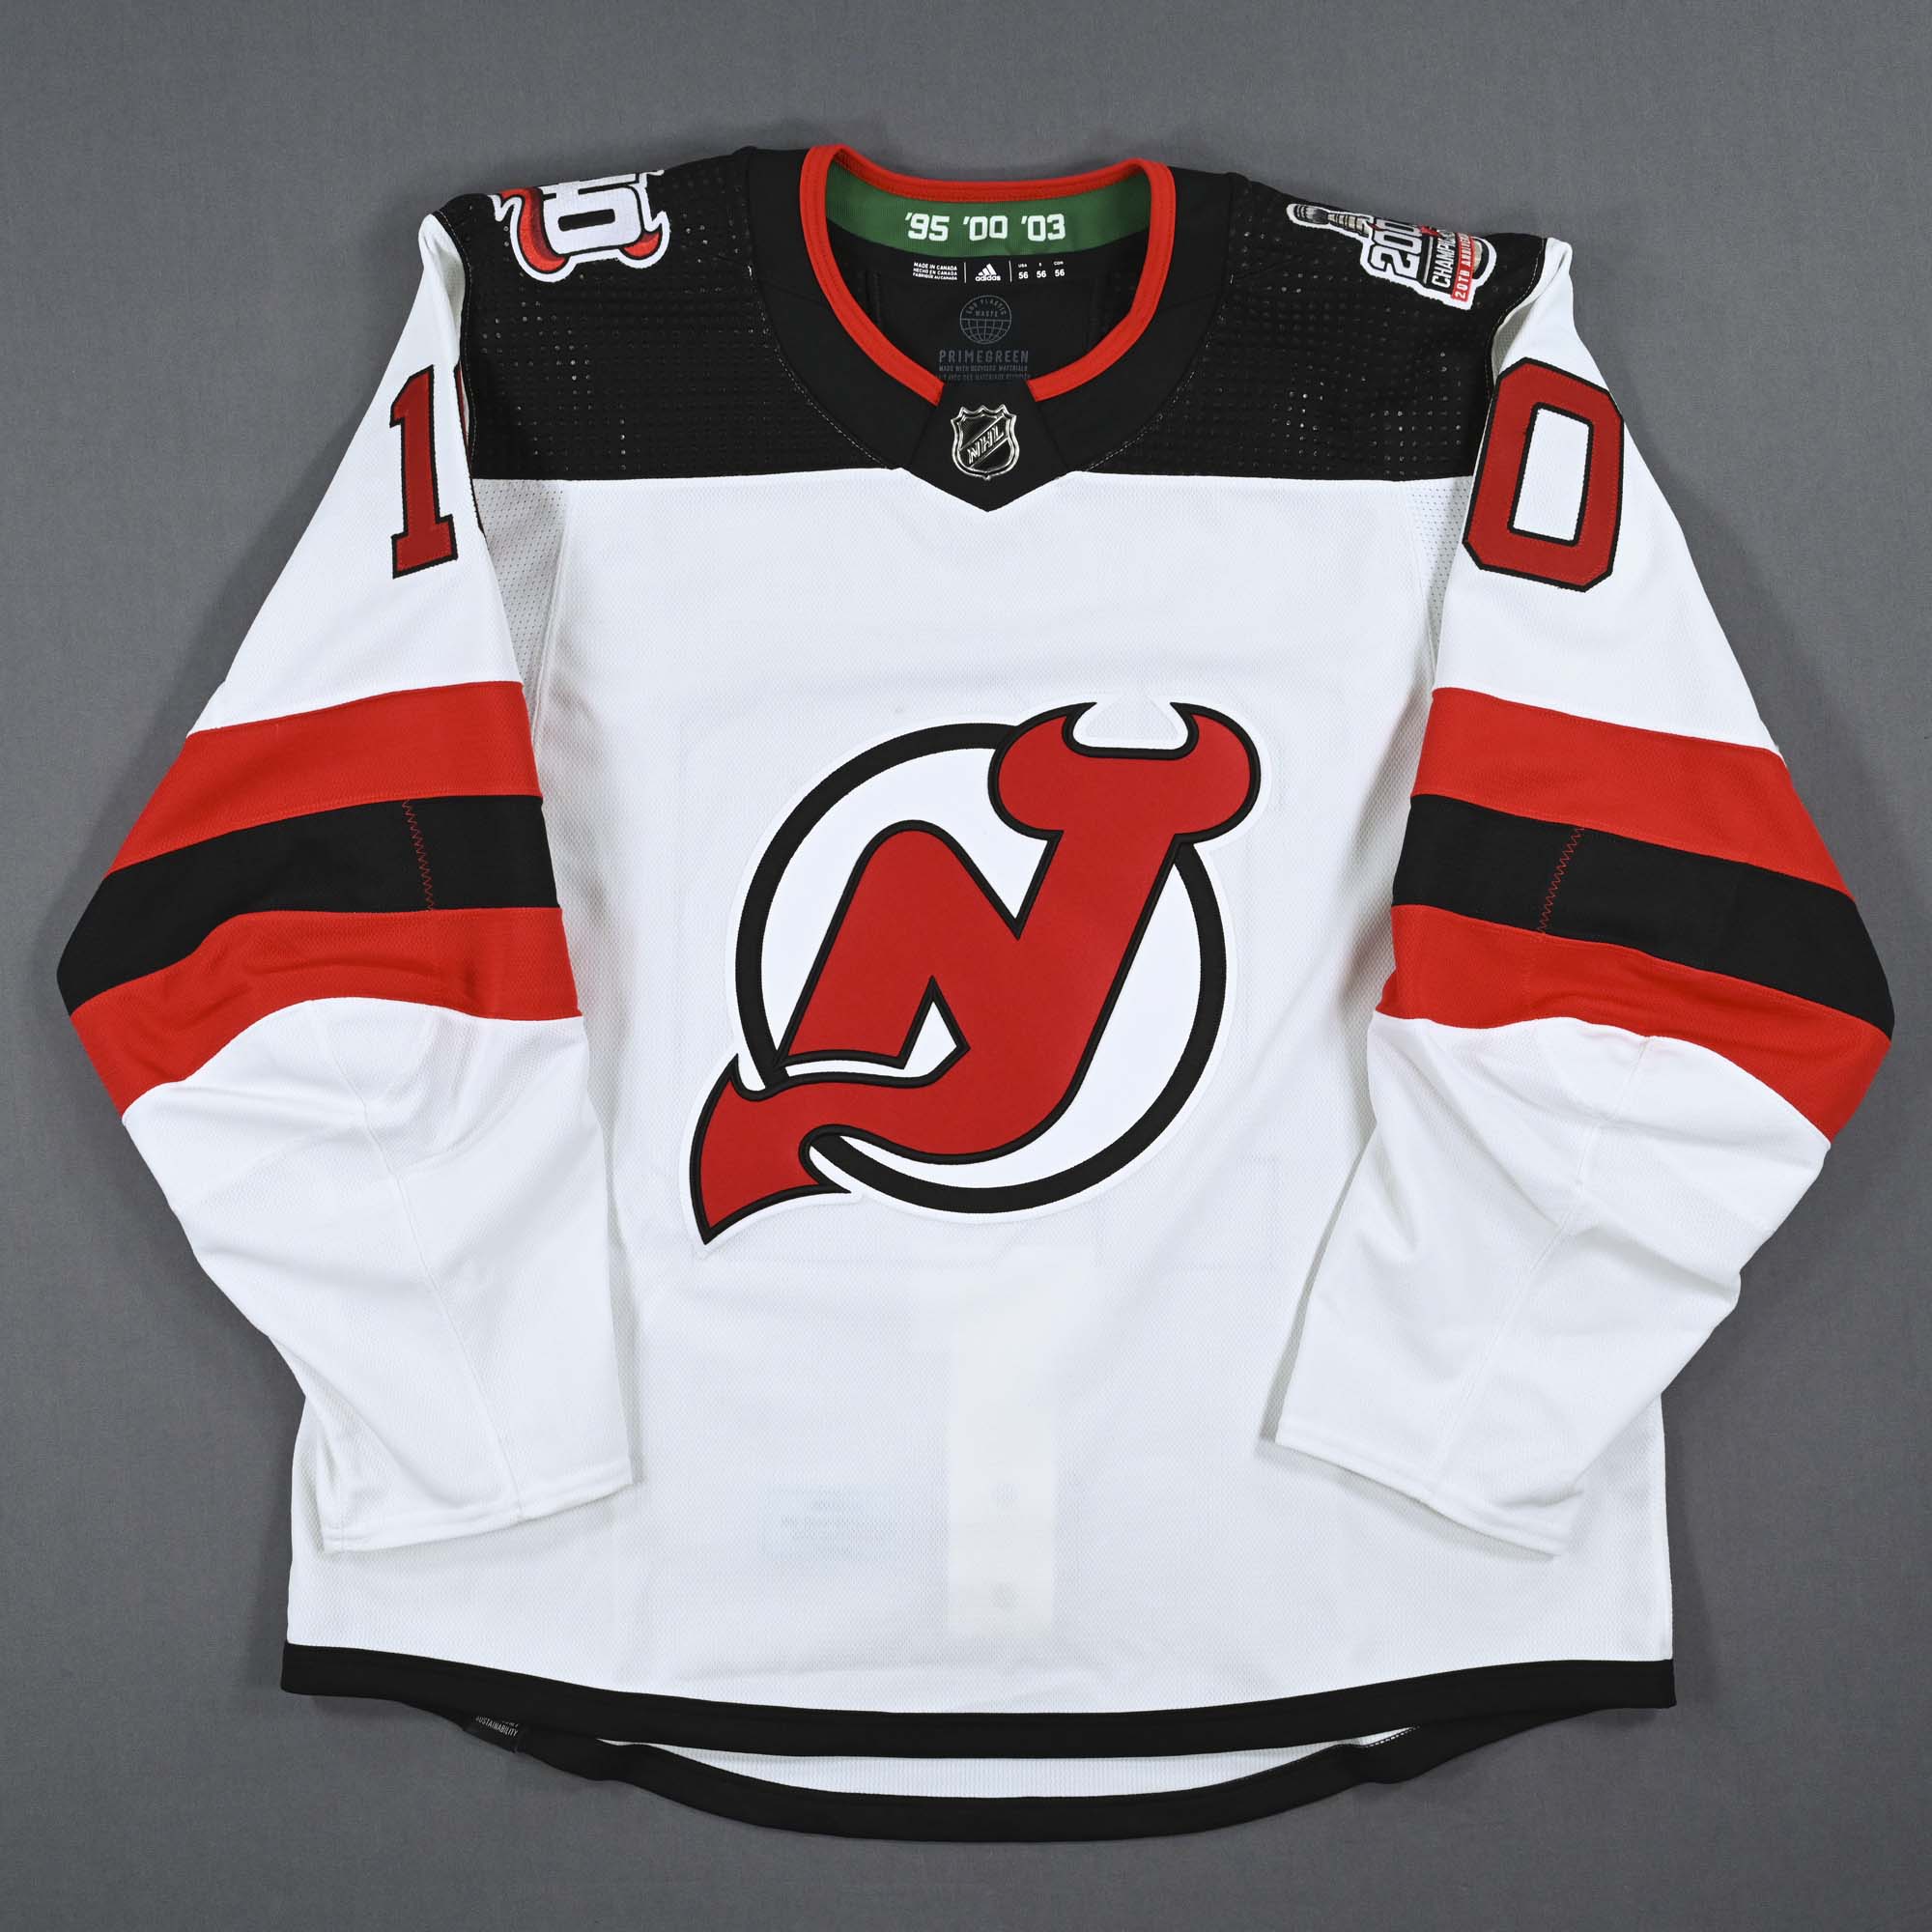 2003 - New Jersey Devils